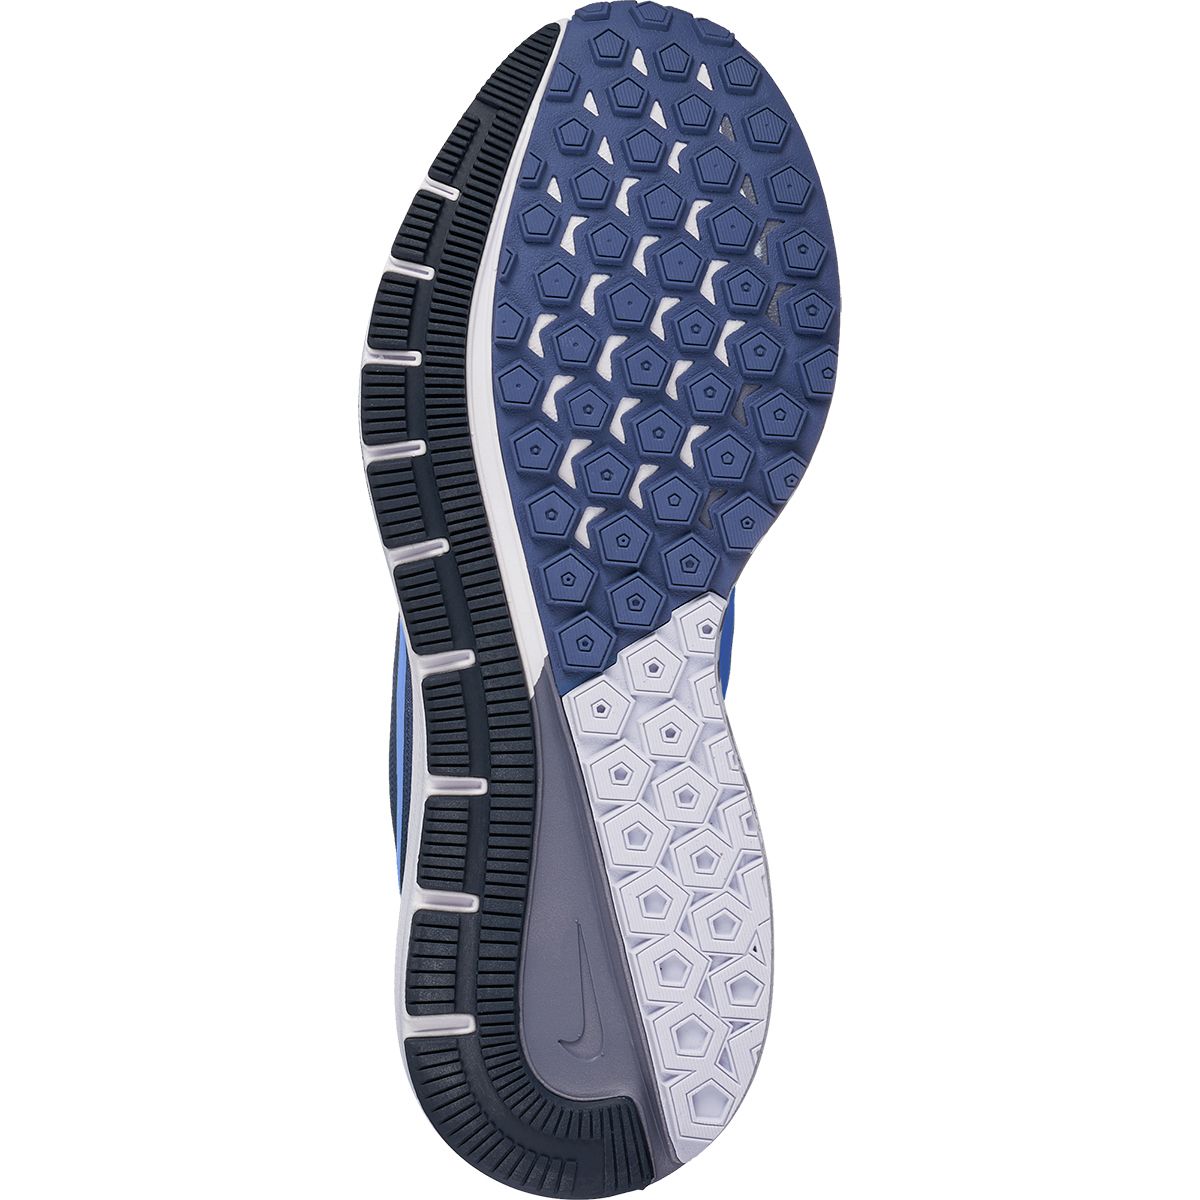 Air Zoom Structure 21 Running Shoe - Women's - Footwear